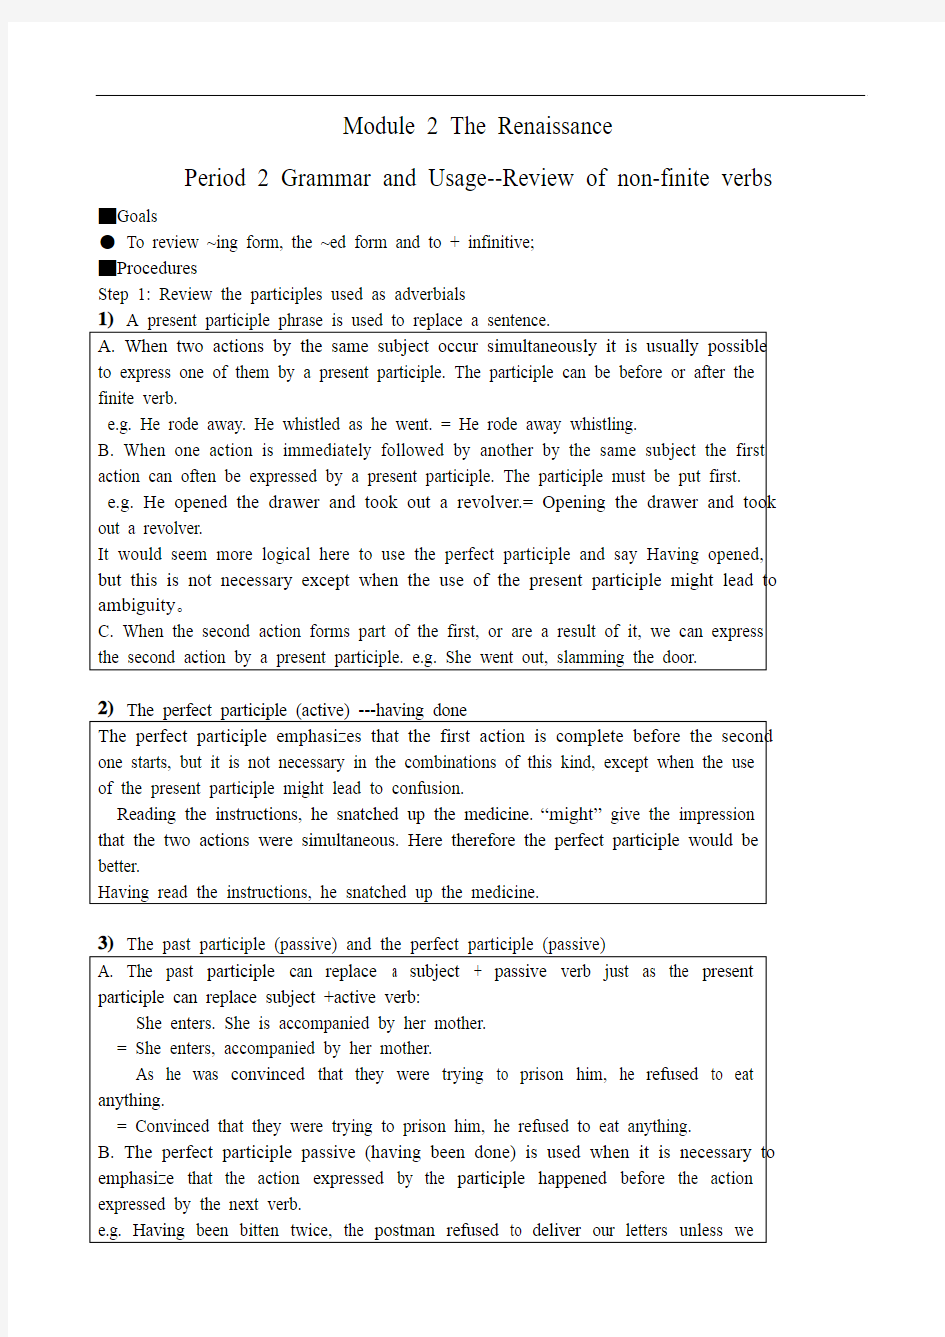 Module 2 The RenaissancePeriod 2 Grammar and Usage--Review of non-finite verbs